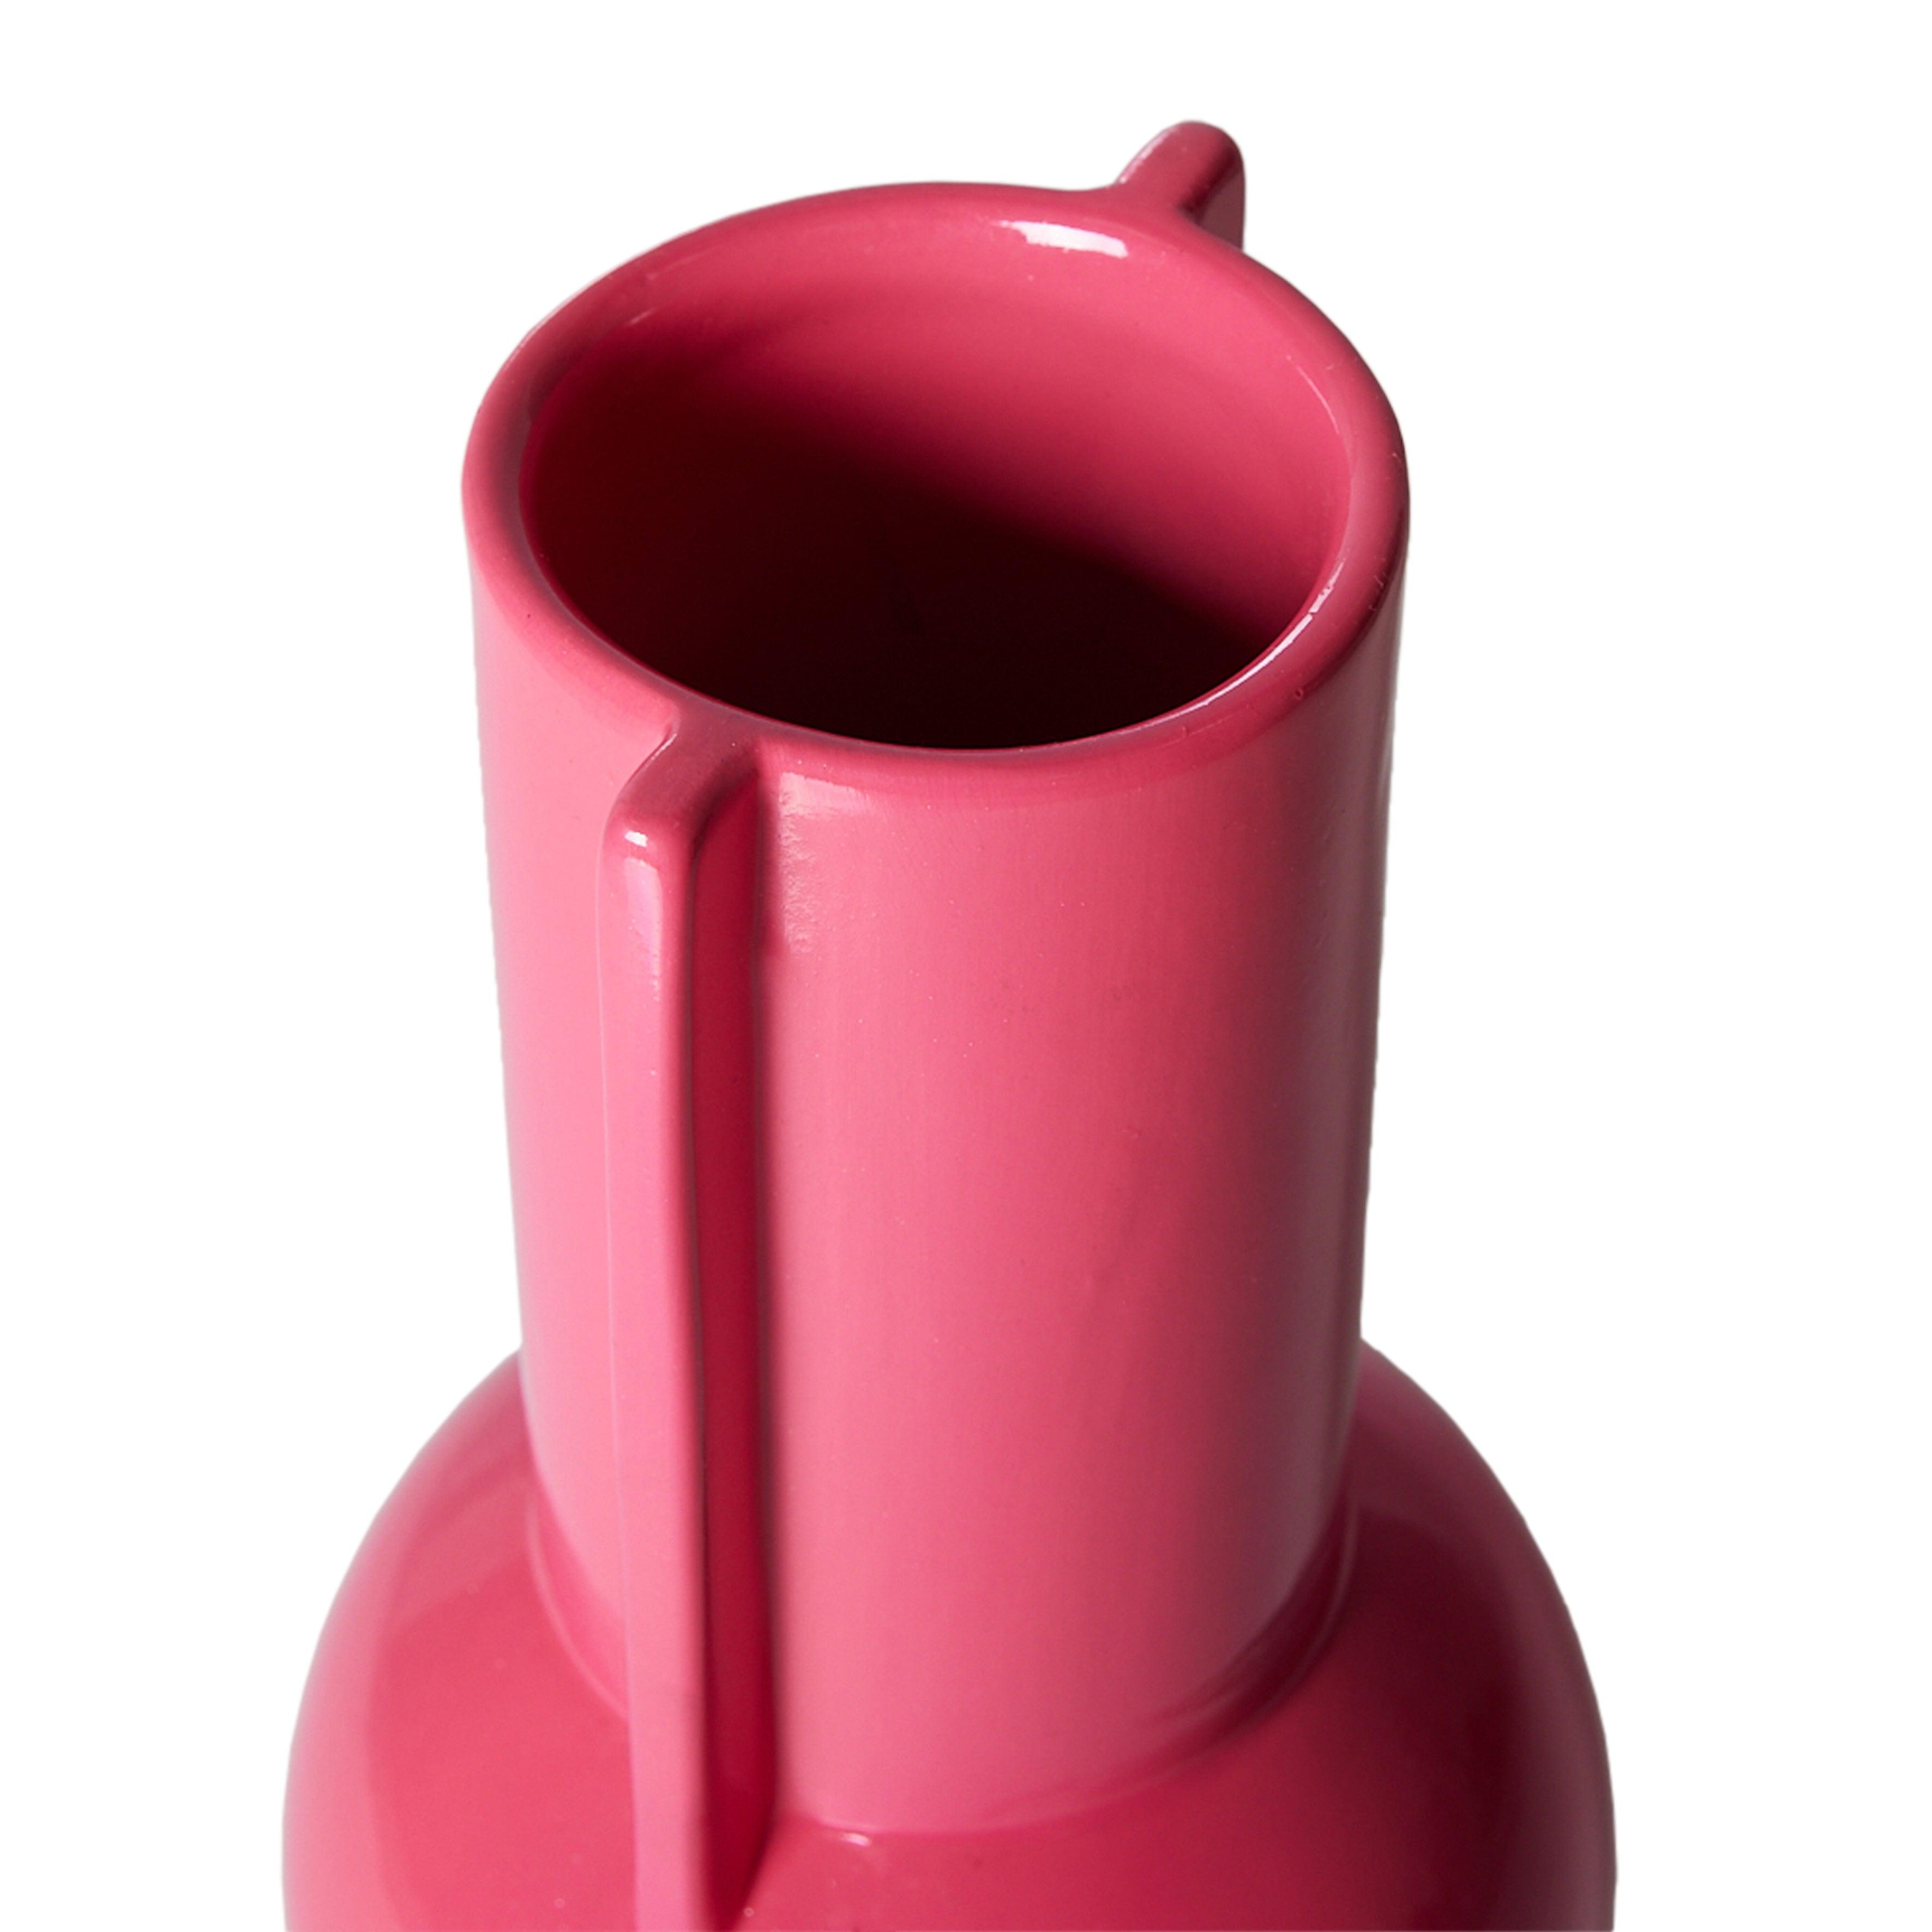 HKliving Vase Keramik hot pink - 20cm - noord®